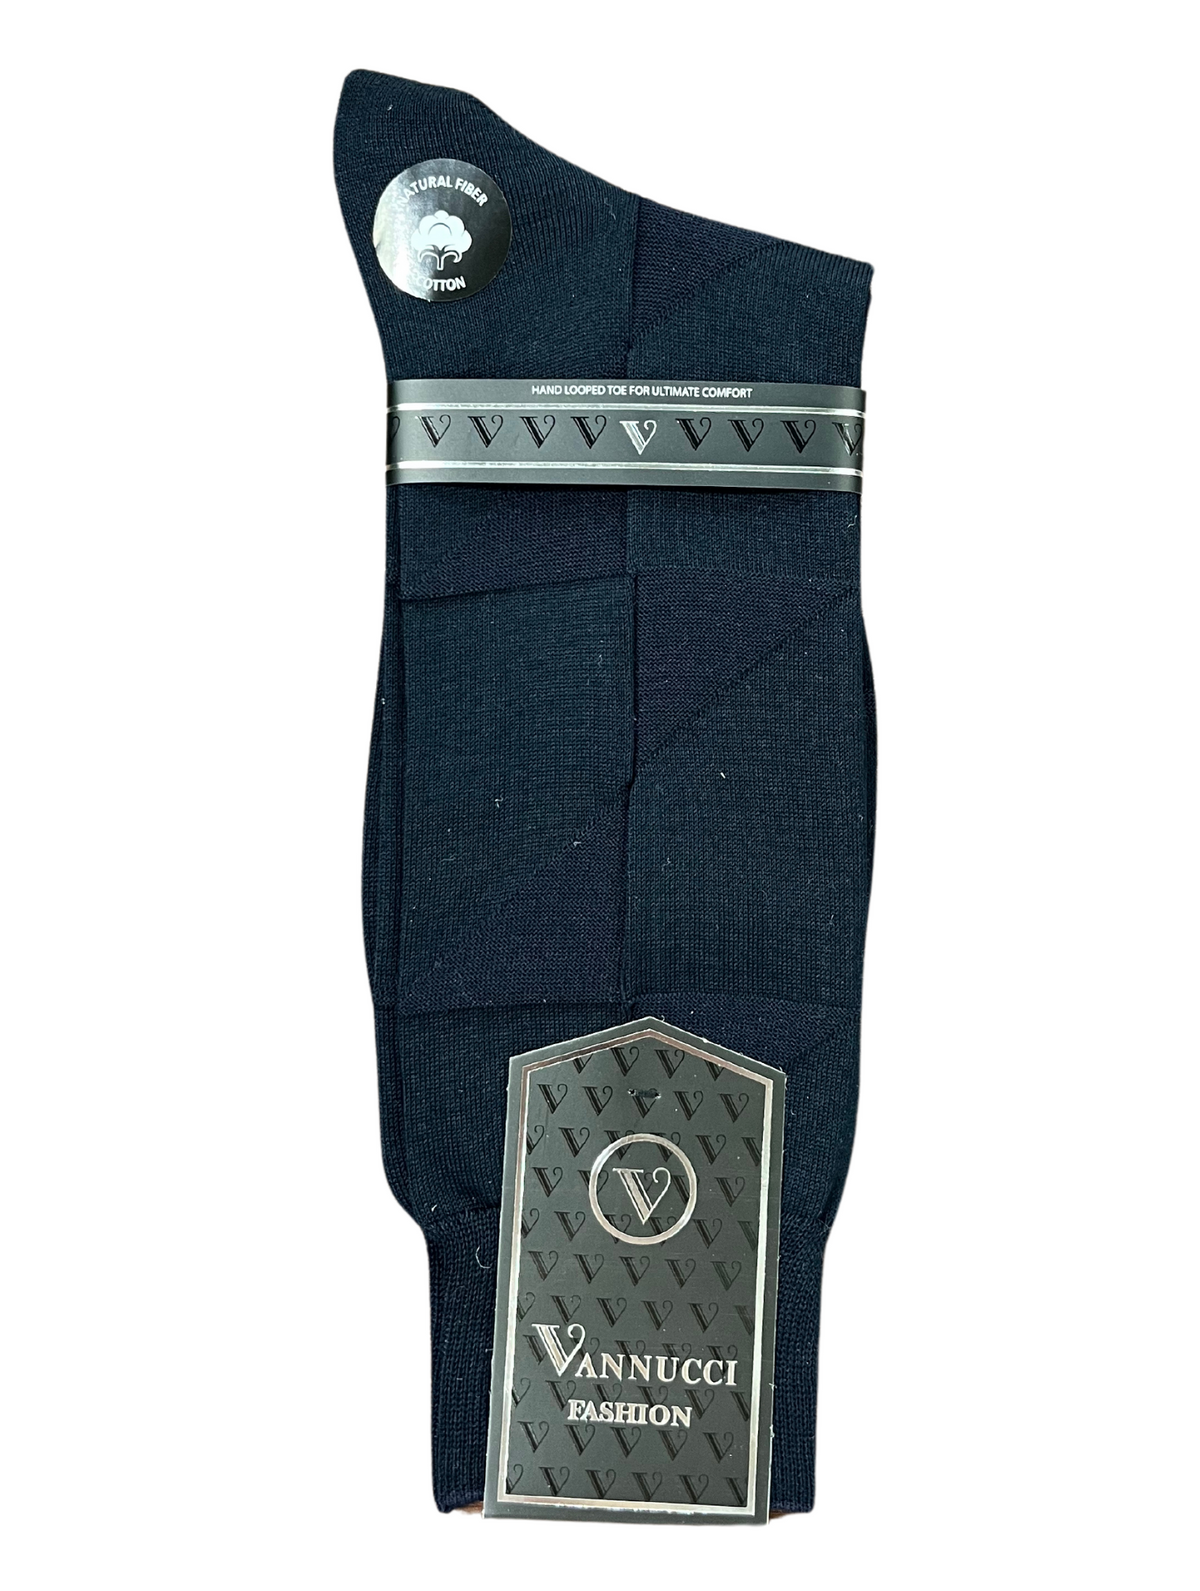 Vannucci Courture Men&#39;s Dress Socks 3824